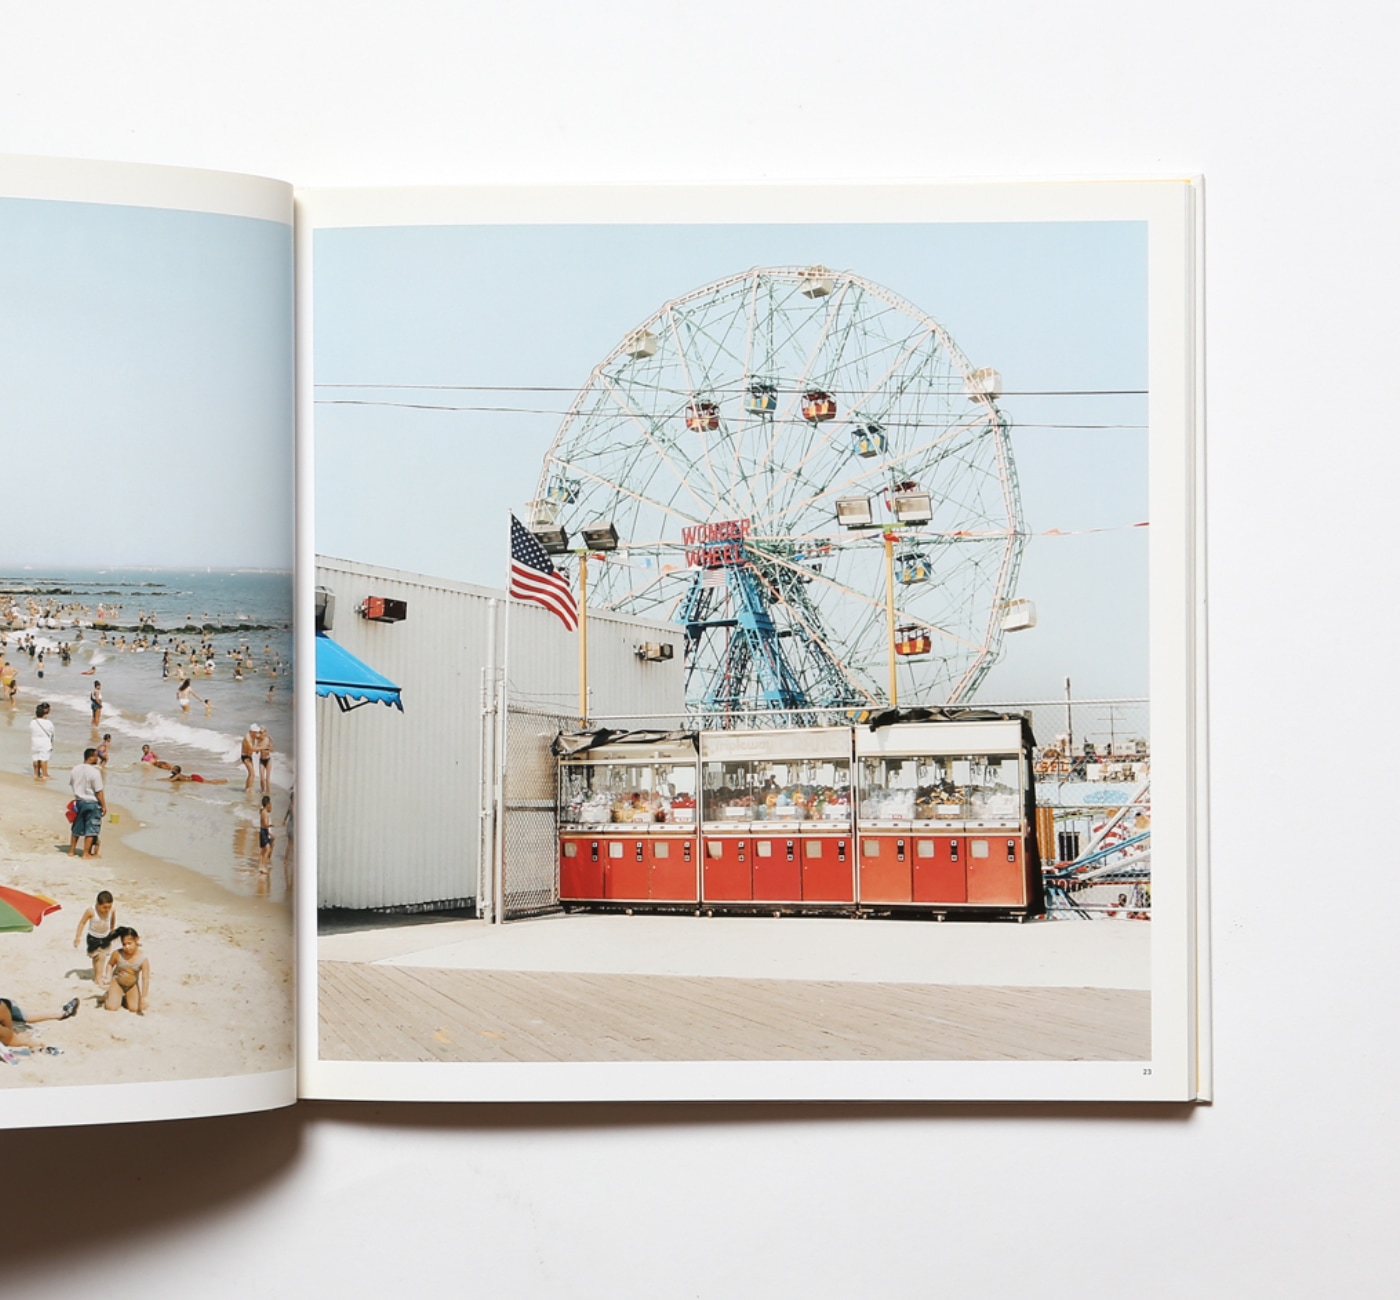 Peter Granser: Coney Island